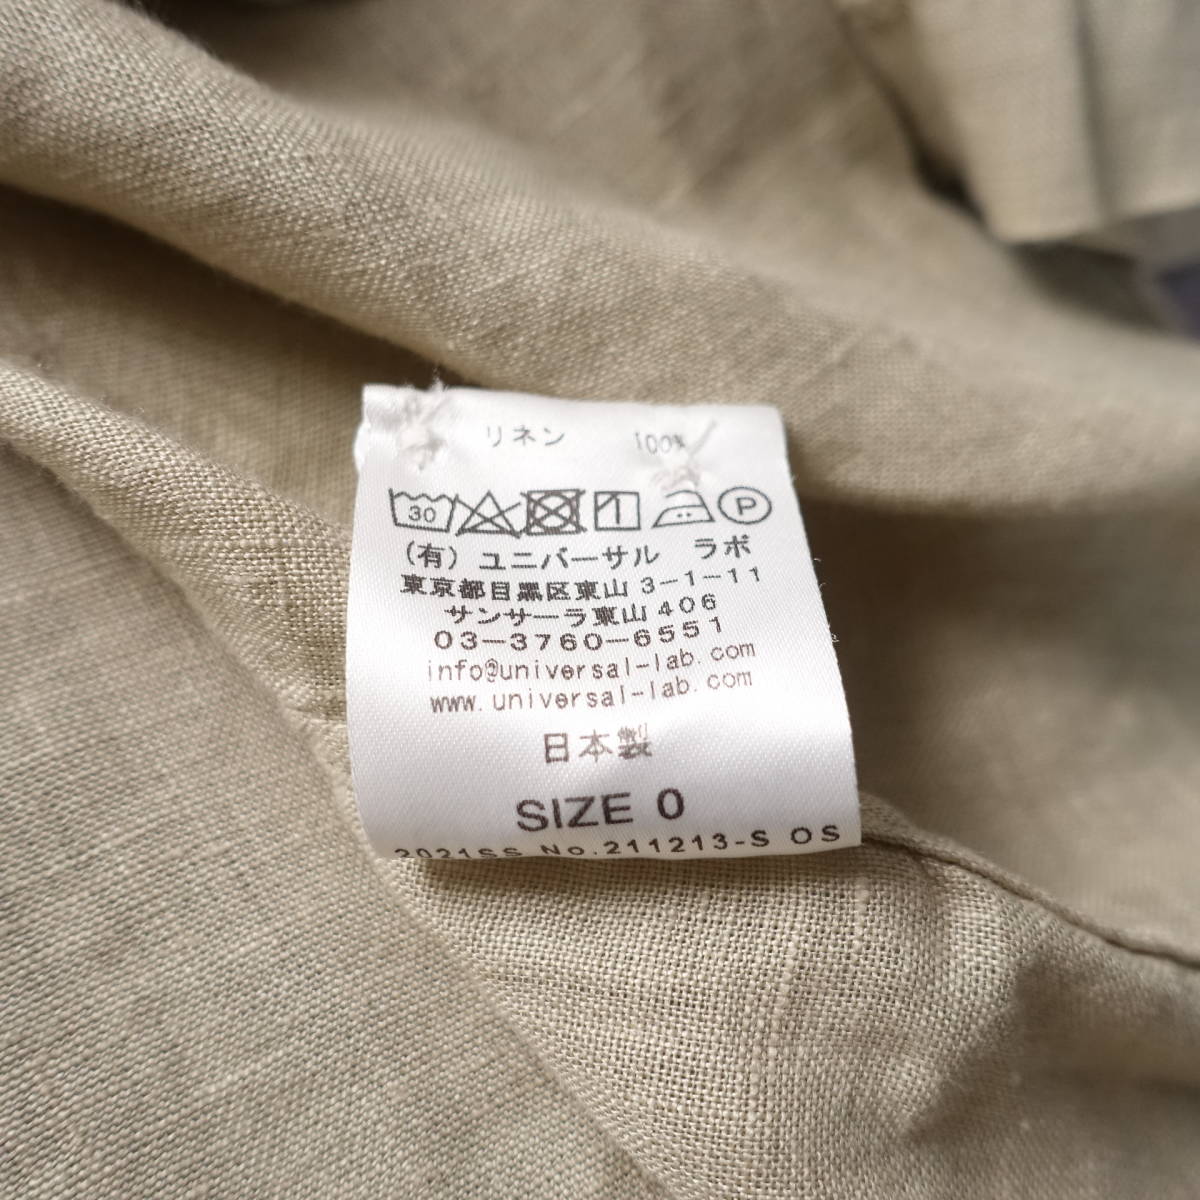 SOUTIENCOL stay Anne koru beautiful goods regular price 20680 jpy / made in Japan /linen100%/linen remake polo-shirt / beige /2021SS